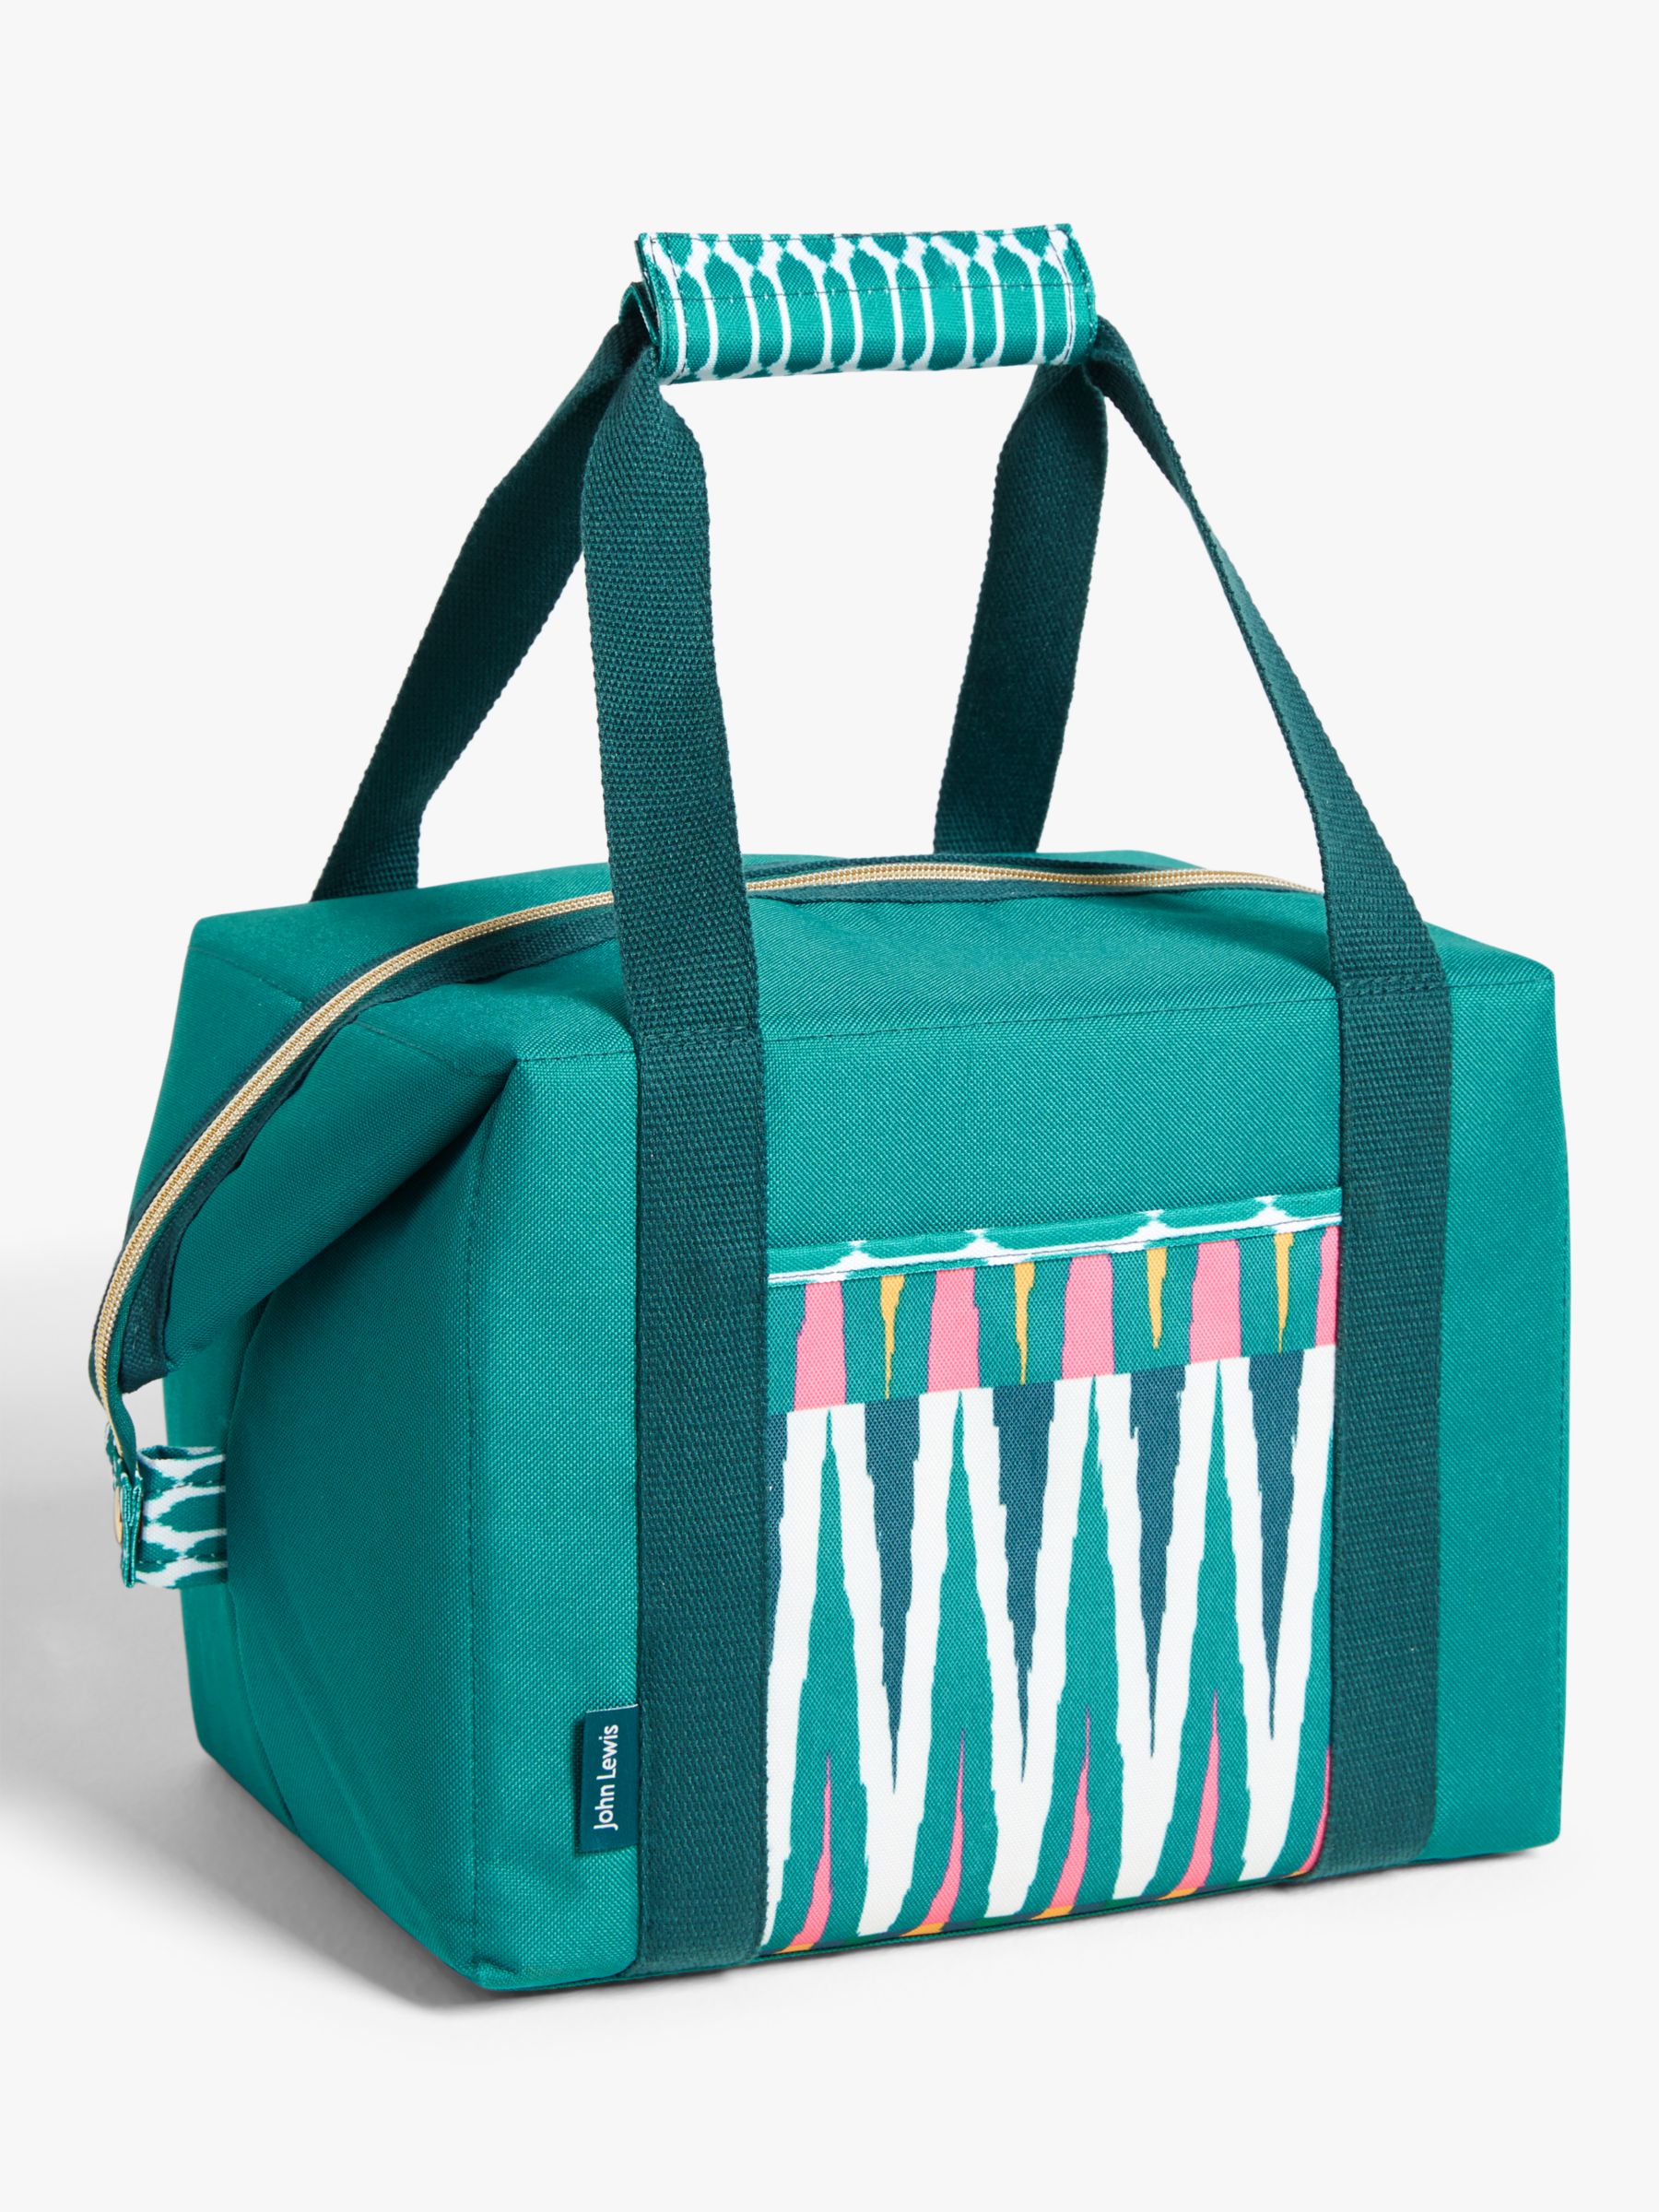 John Lewis & Partners Fusion Ikat Picnic Cooler Bag, 20L, Agate